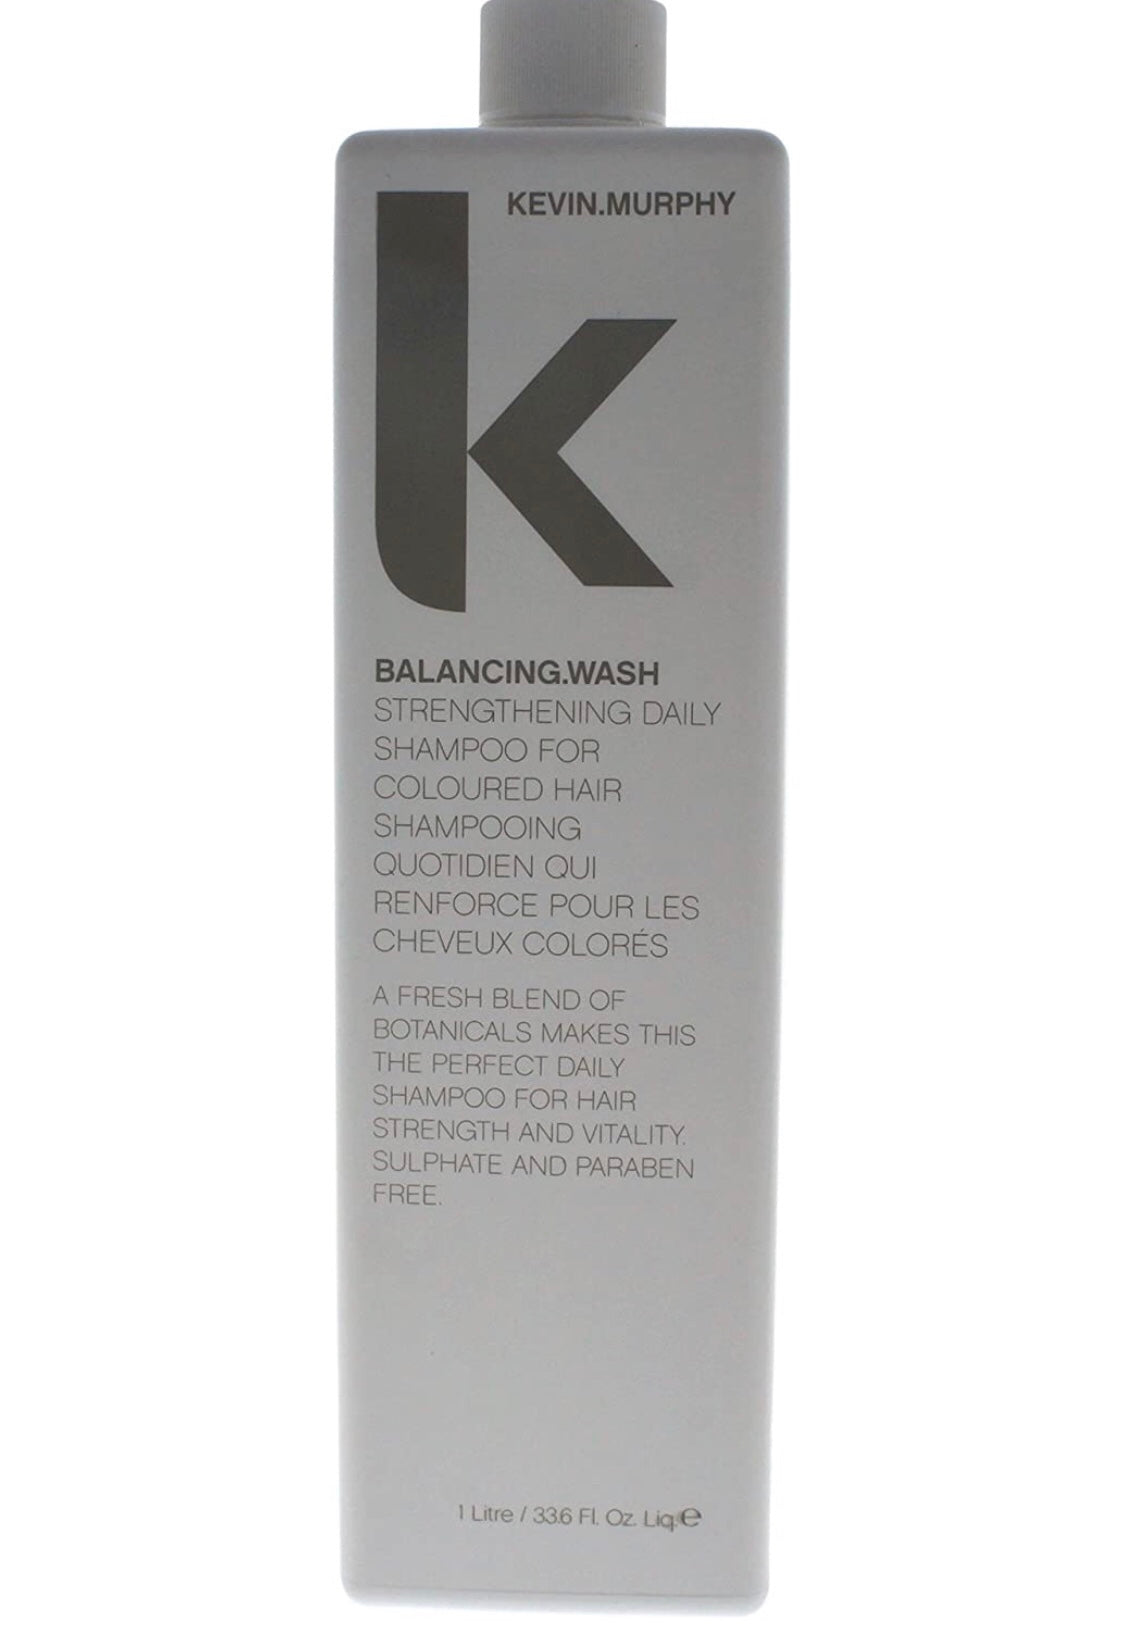 Kevin.Murphy - Balancing.Wash Strengthening daily shampoo 33.8 fl. oz. / 1 L